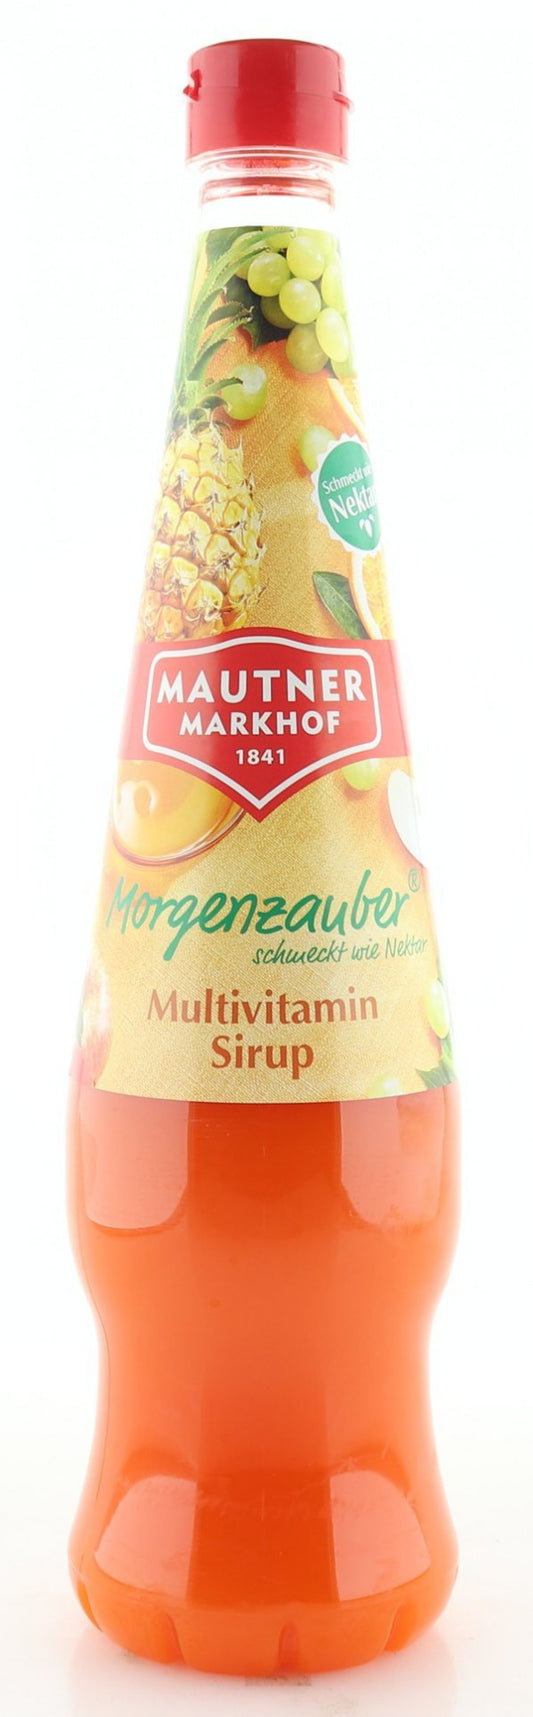 Mautner Markhof Morgenzauber Sirup Multivitamin